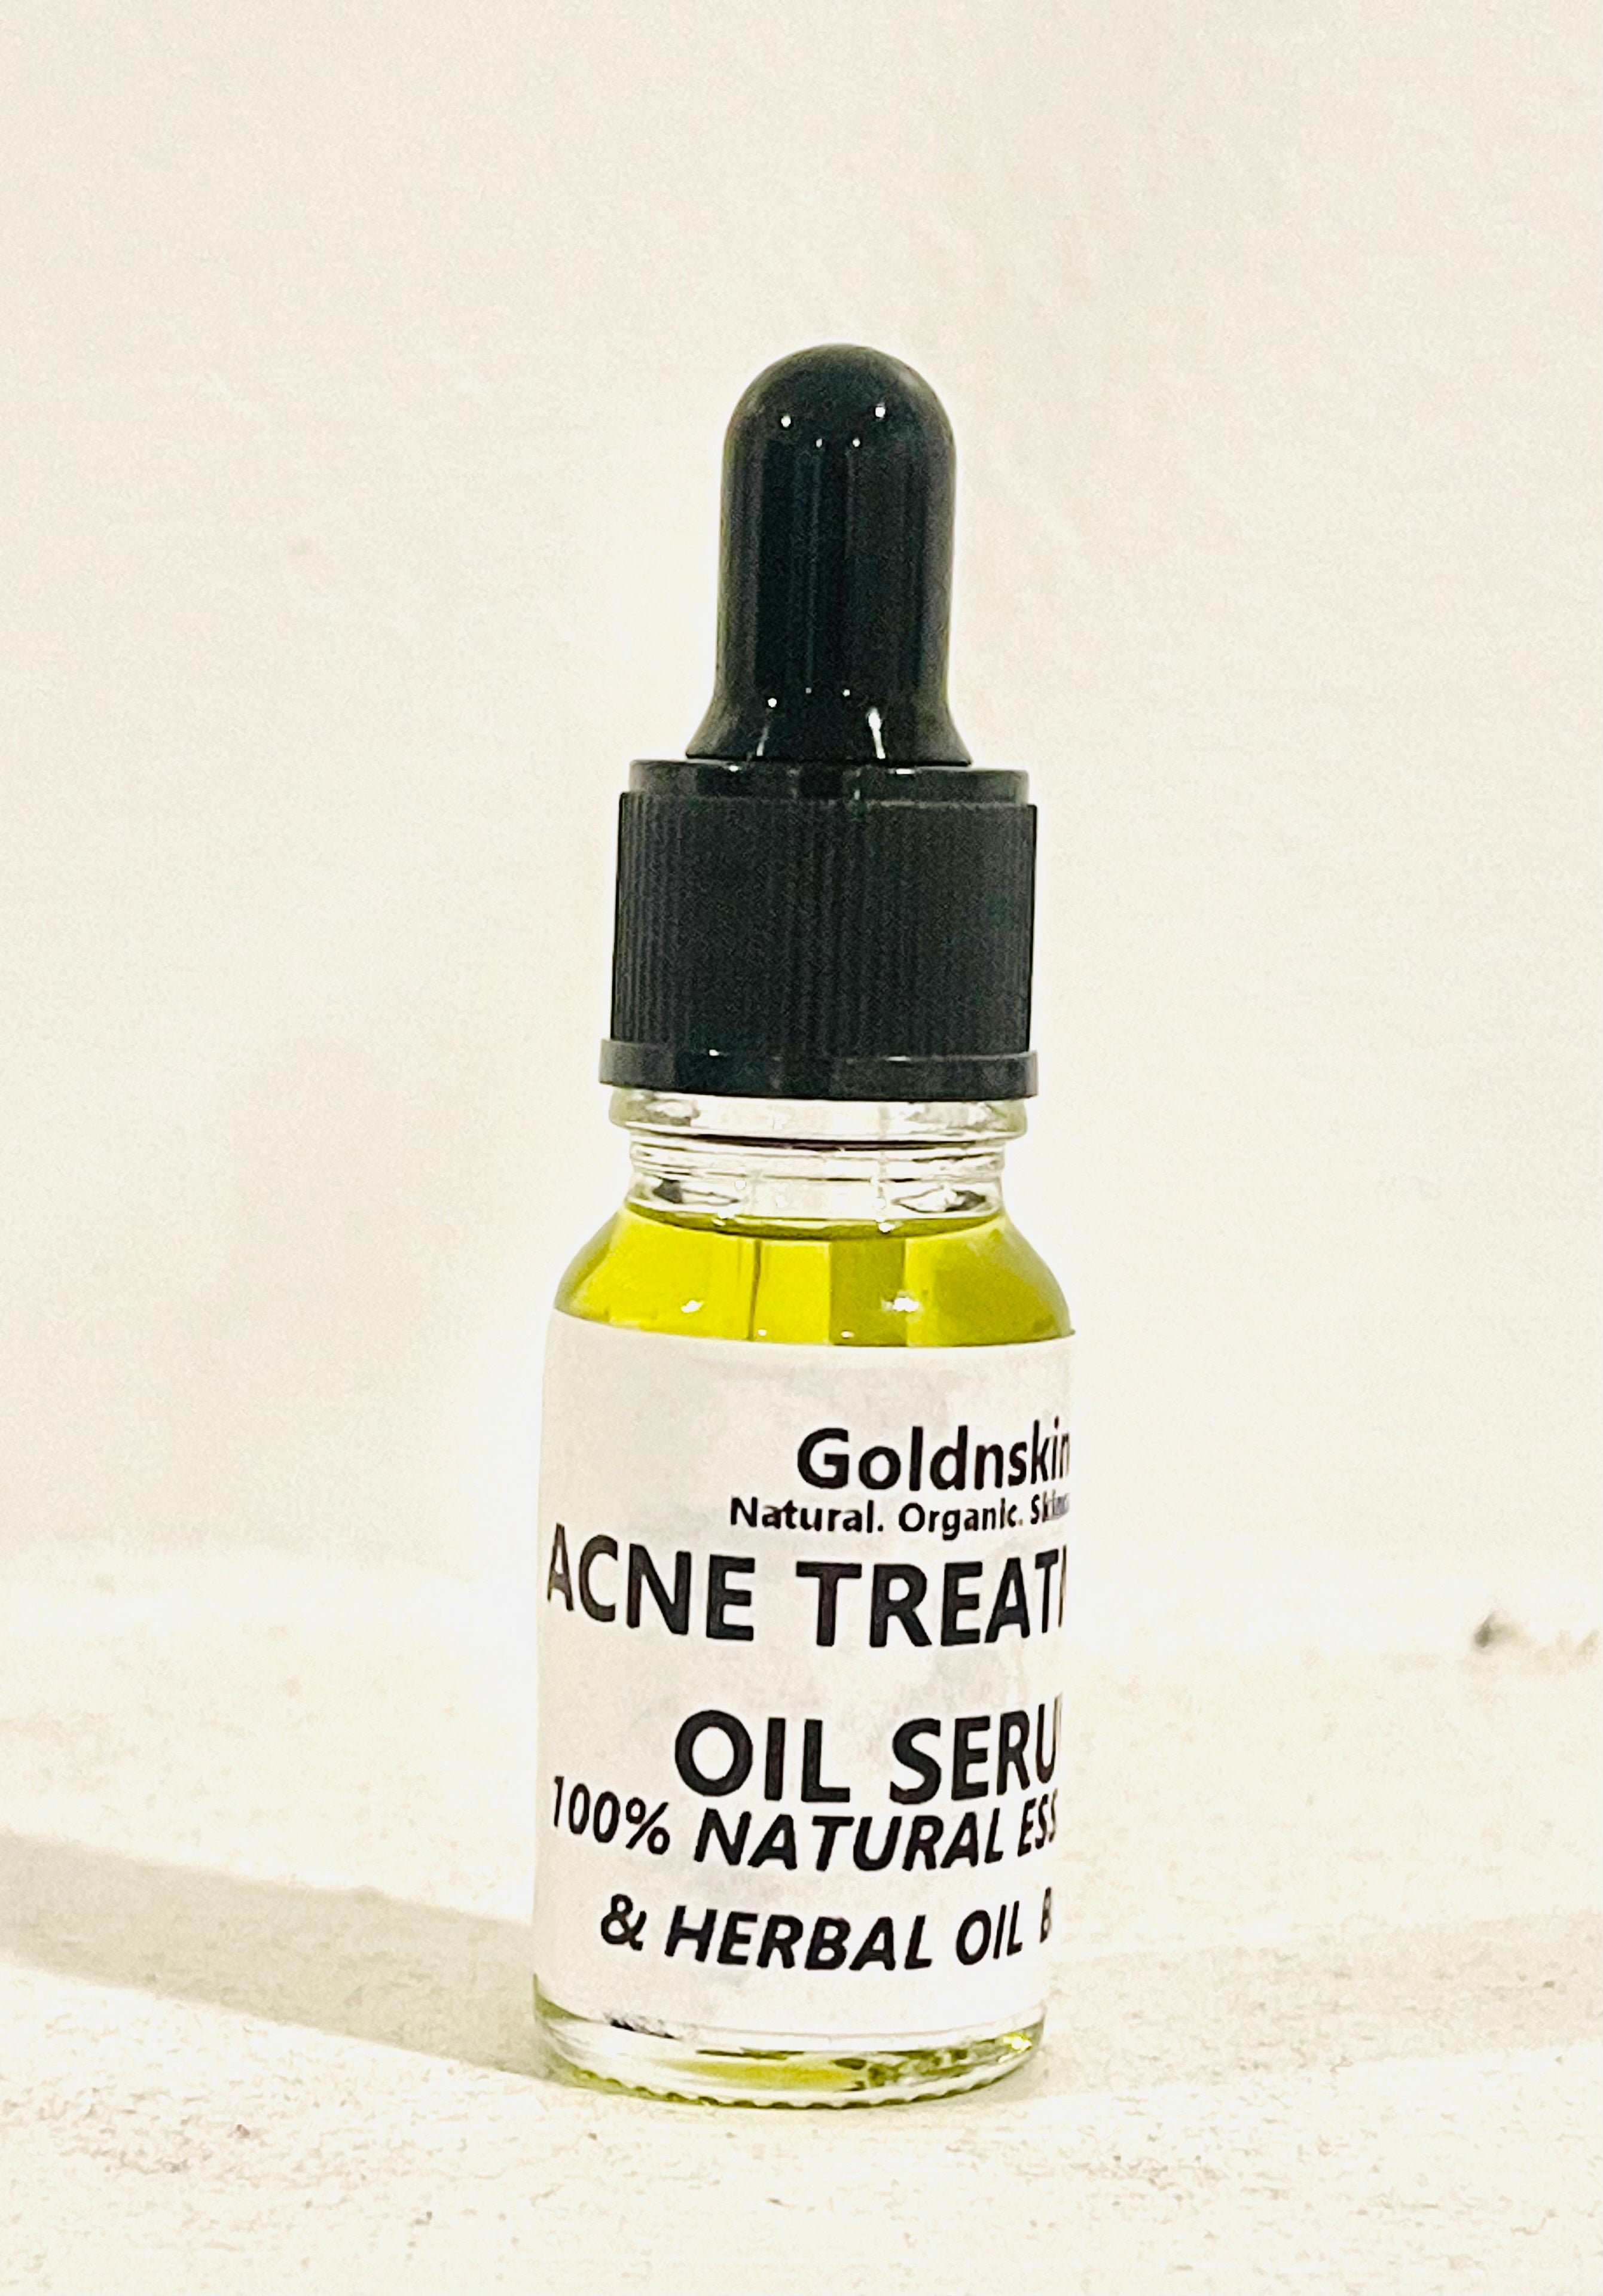 Acne treatment oil